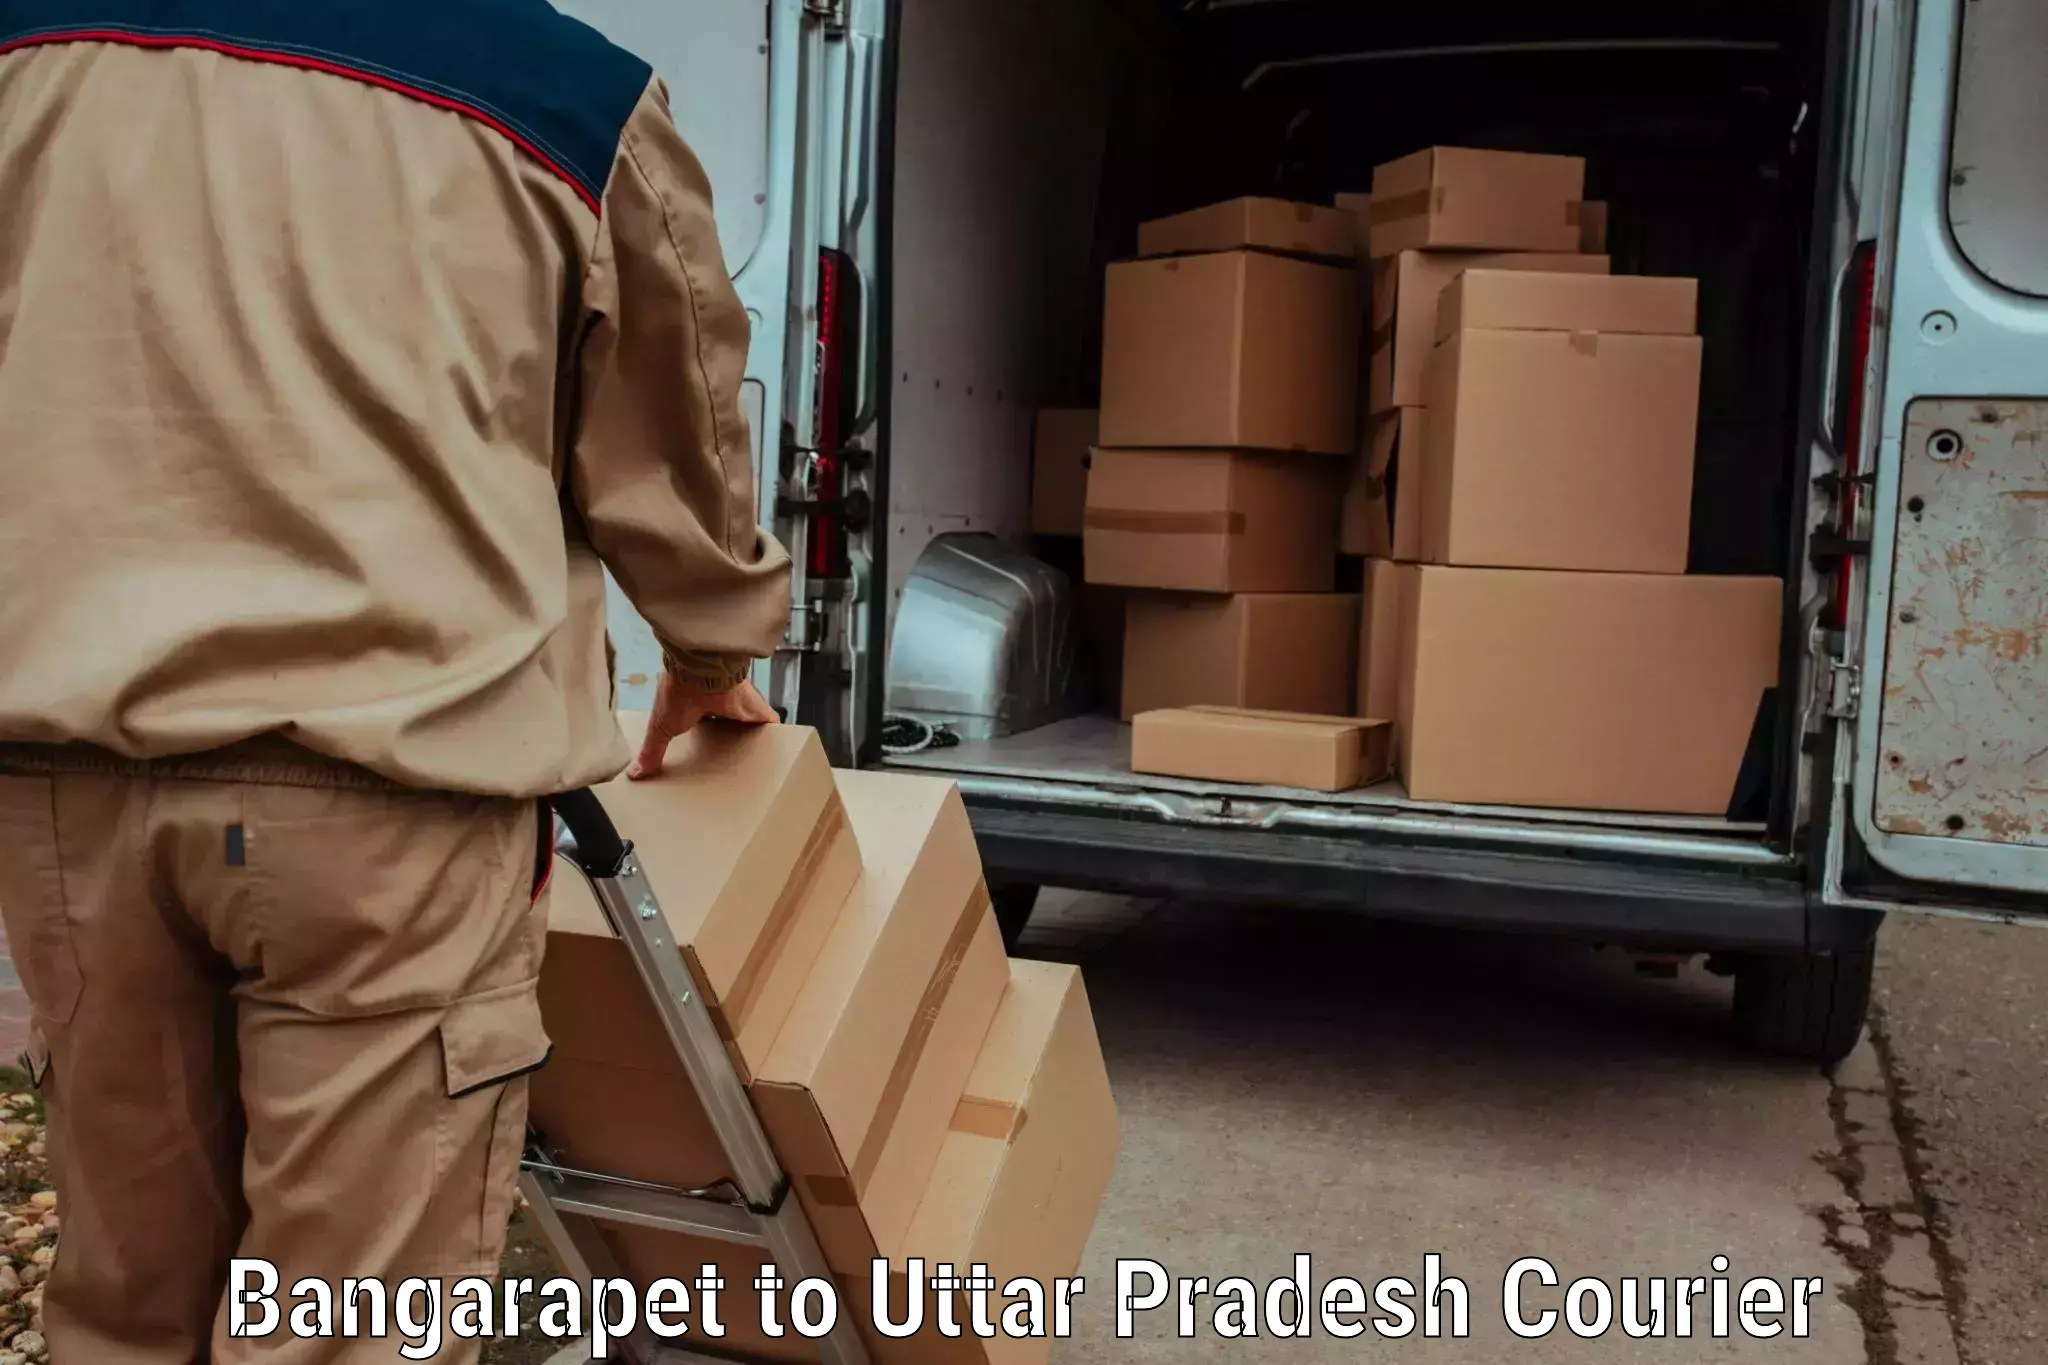 Luggage shipment specialists Bangarapet to Uttar Pradesh